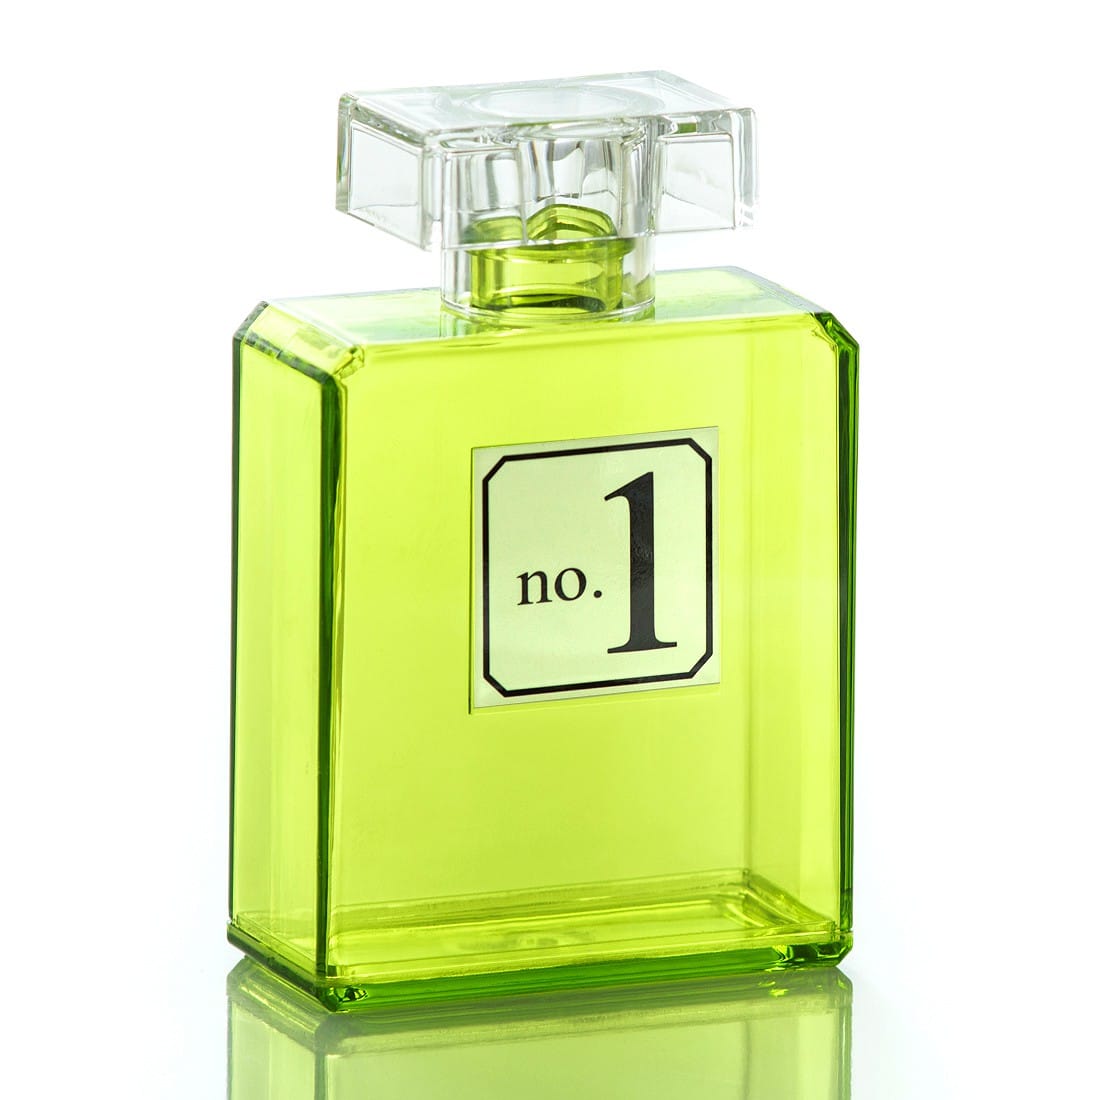 Бутылка декоративная Green, 14х11 см, 400 мл, Пластик, Baci Milano, Италия